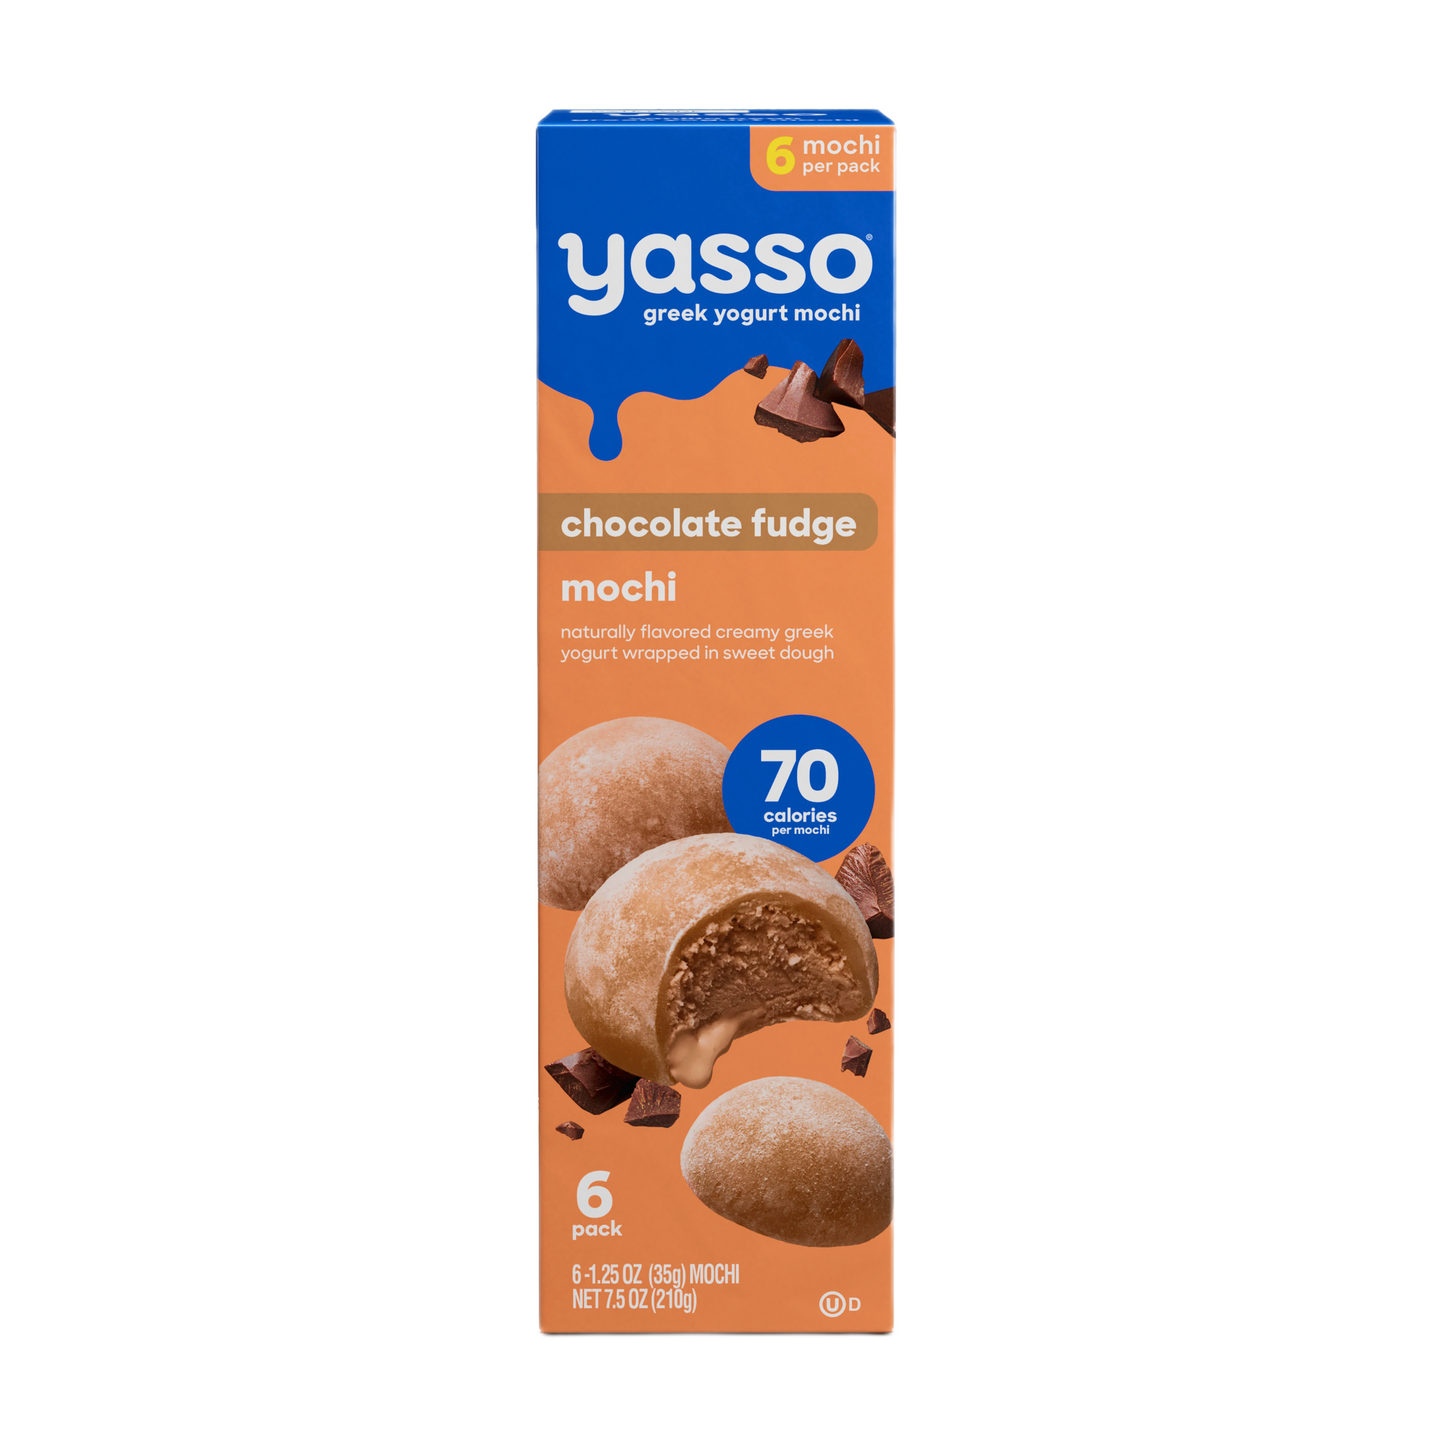 yasso chocolate fudge mochi